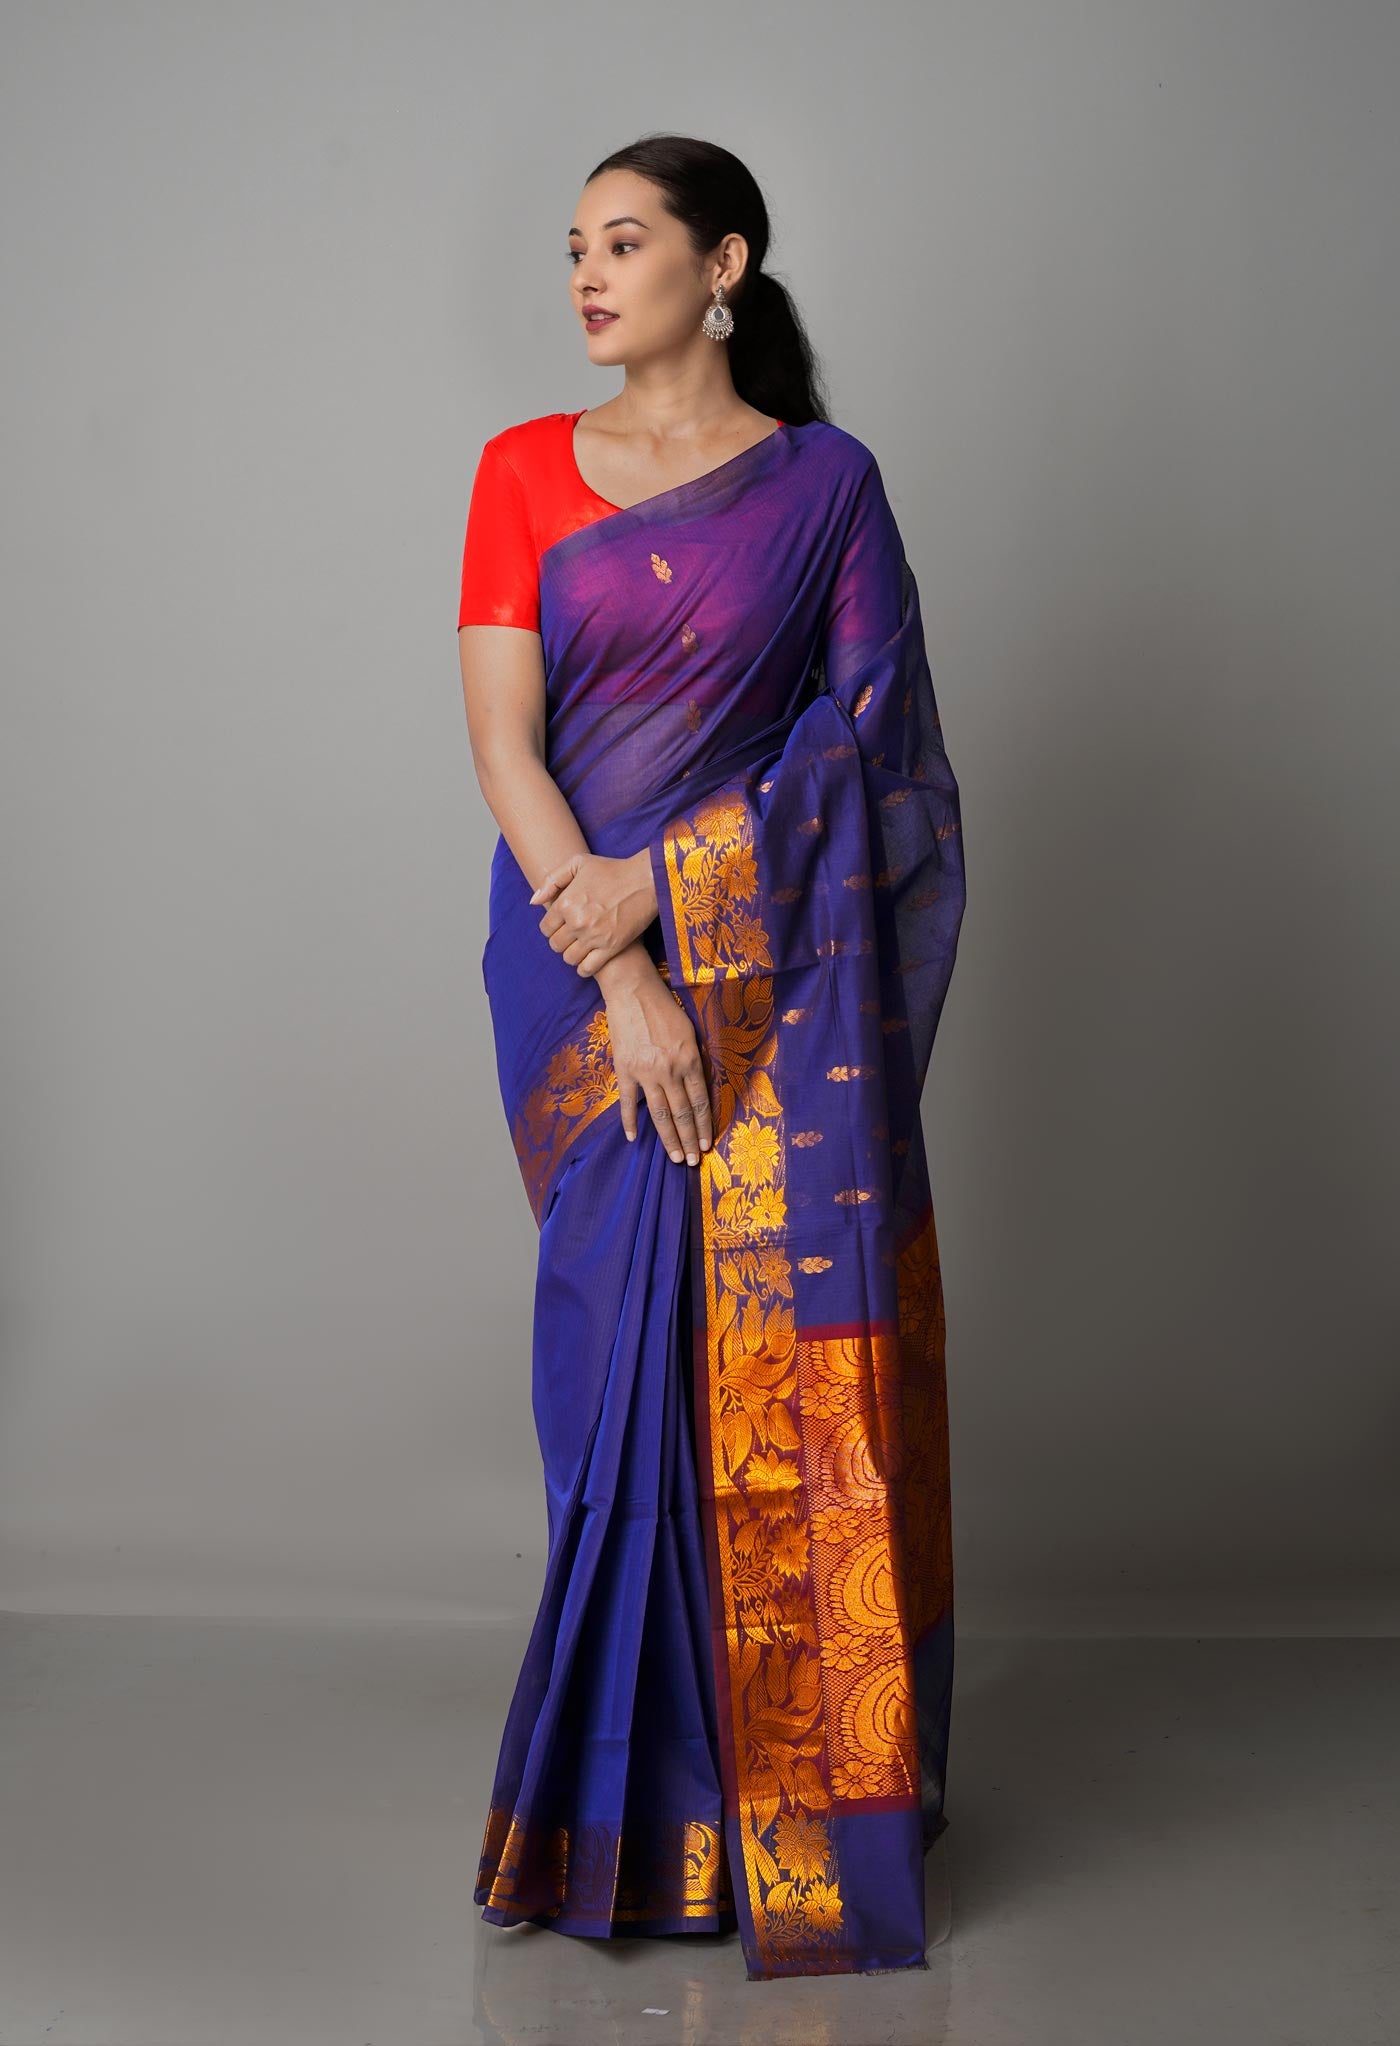 Handloom Pure Silk Gadwal Saree in Navy Blue